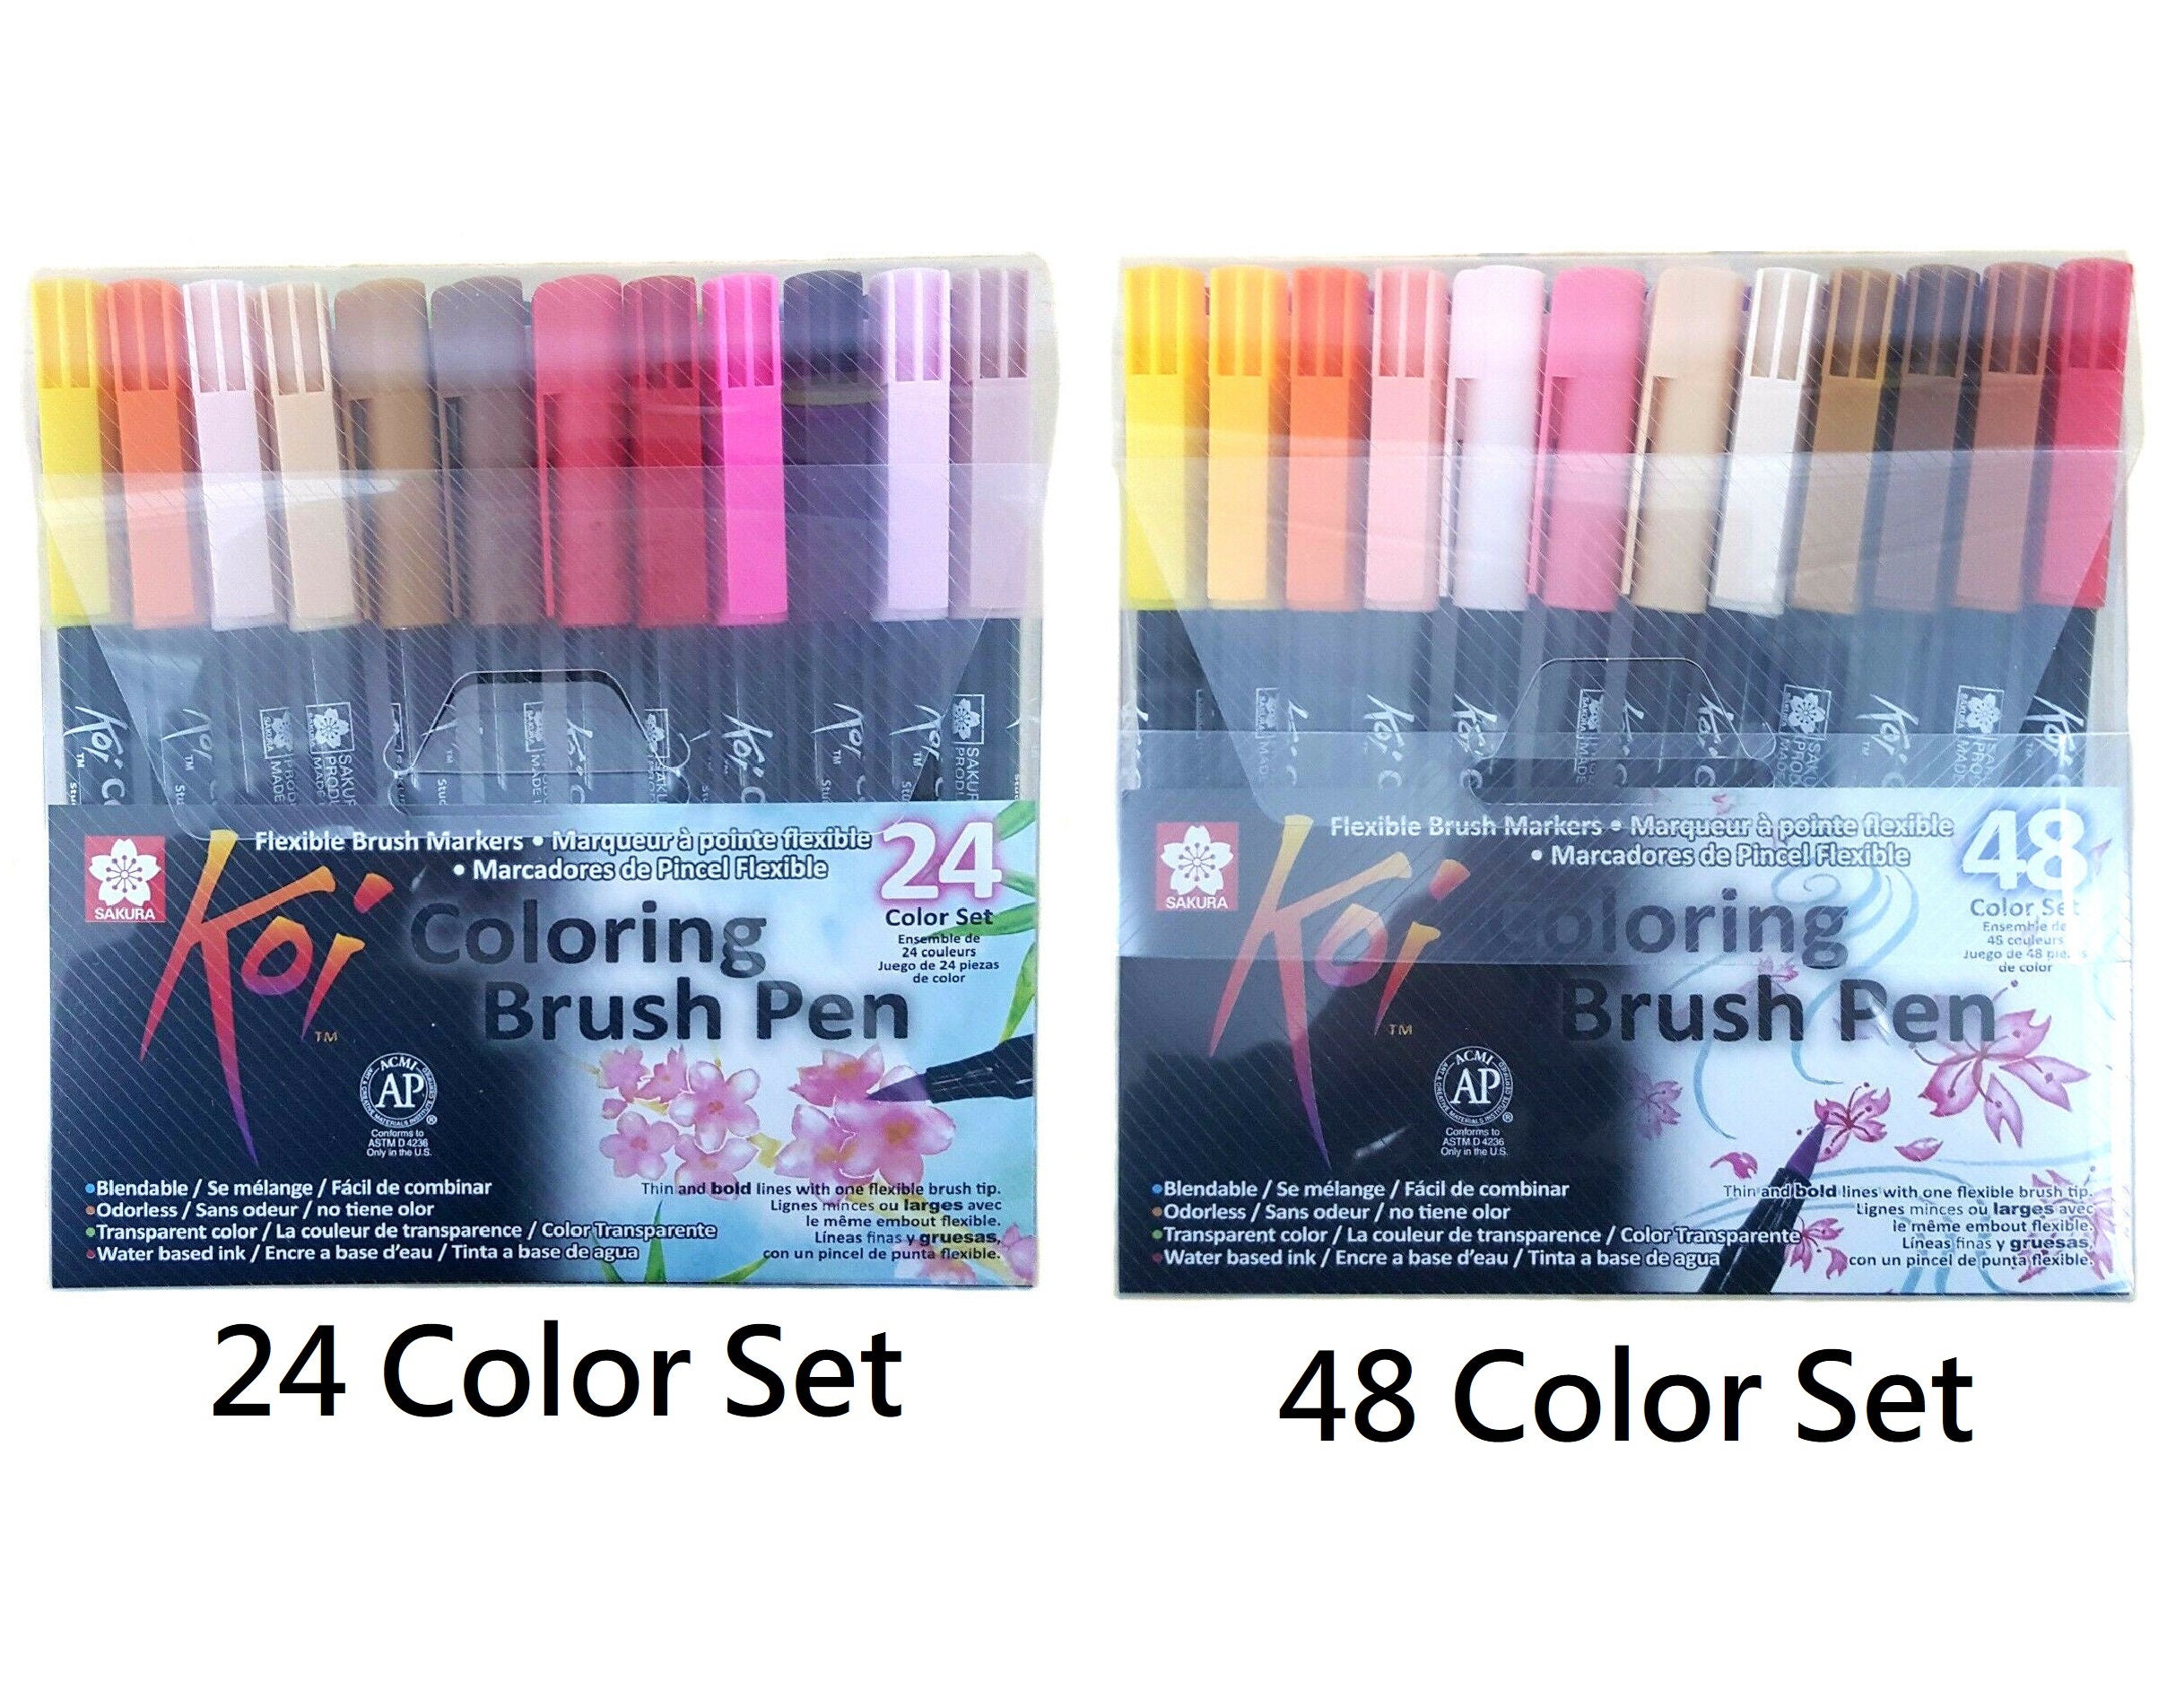 voordat kiem raket Sakura Koi Coloring Brush Pen 24 48 Color Set Japan - Etsy